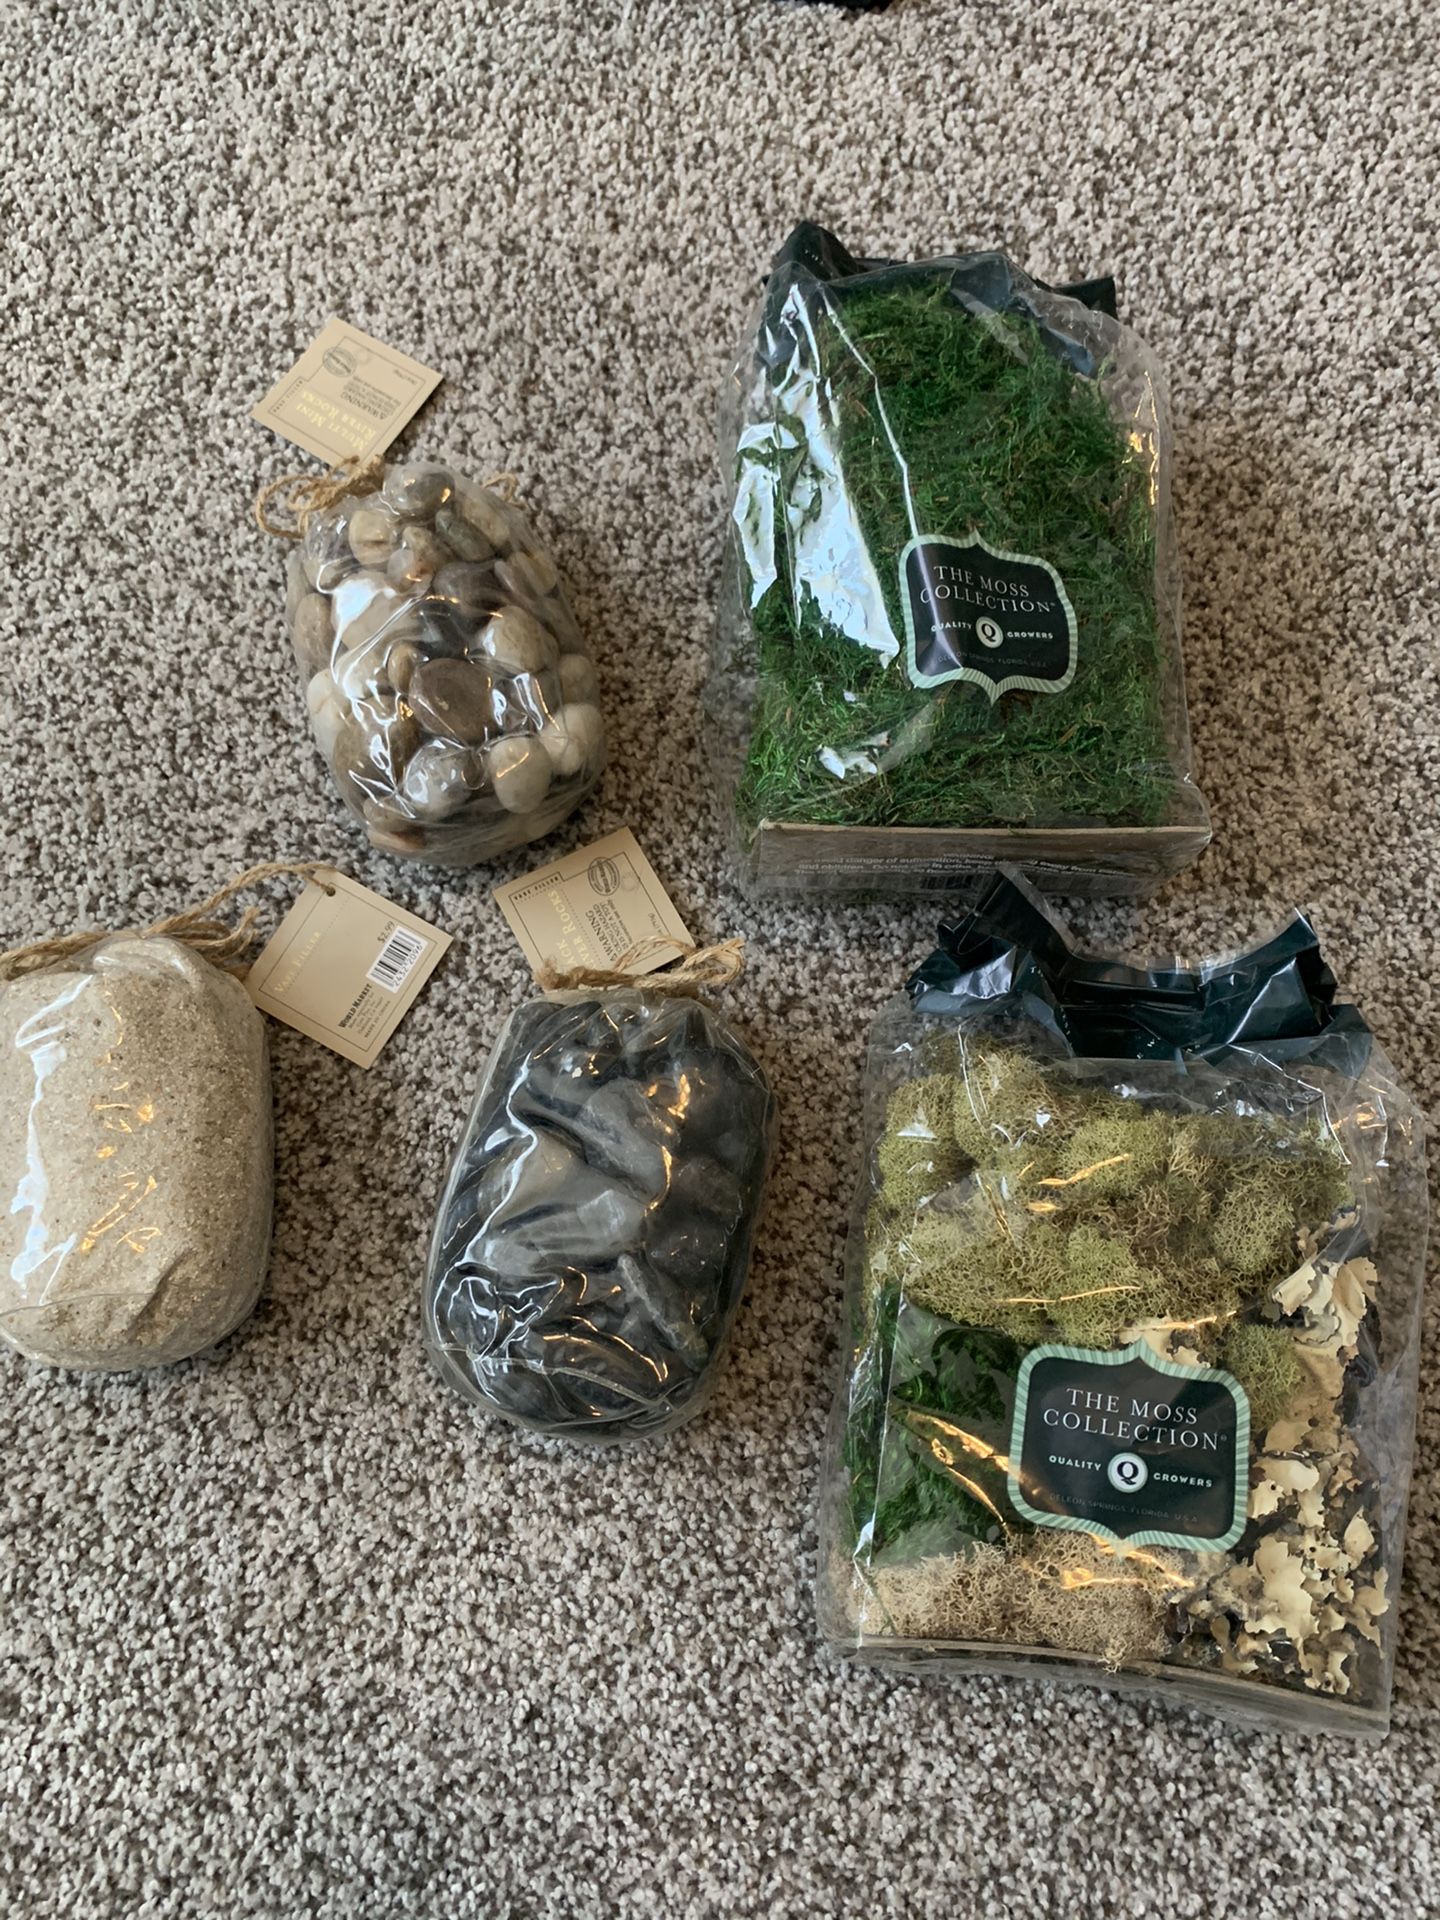 Terrarium supplies, moss, stones, sand - DIY